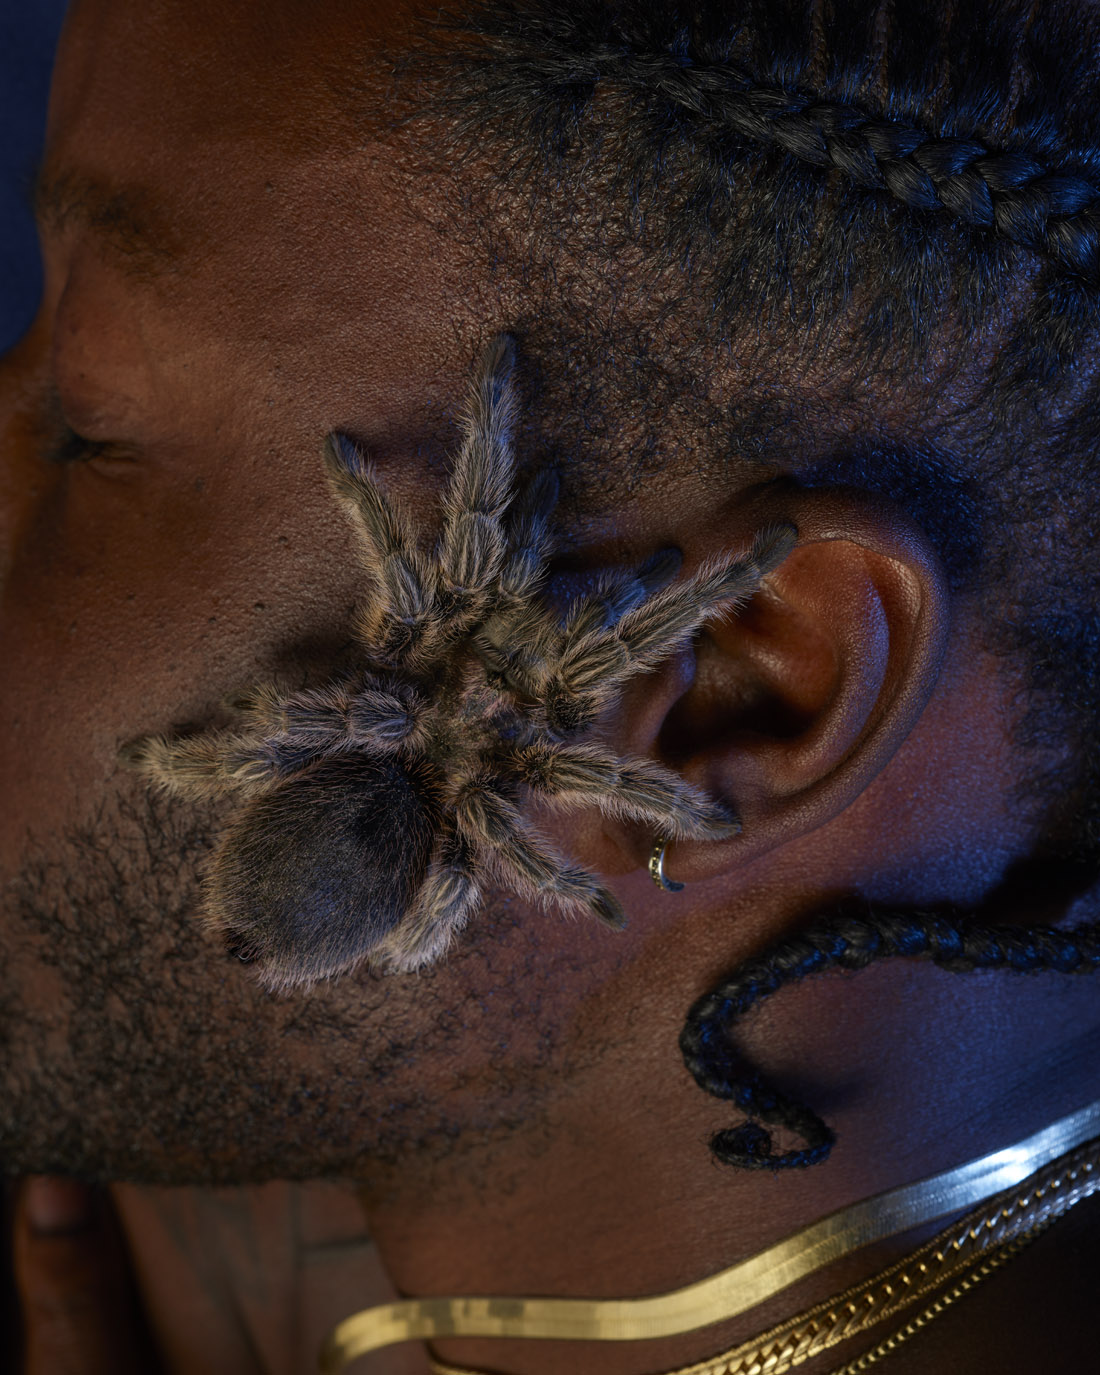 A man with a tarantula on his face, photograph by Awol Erizku